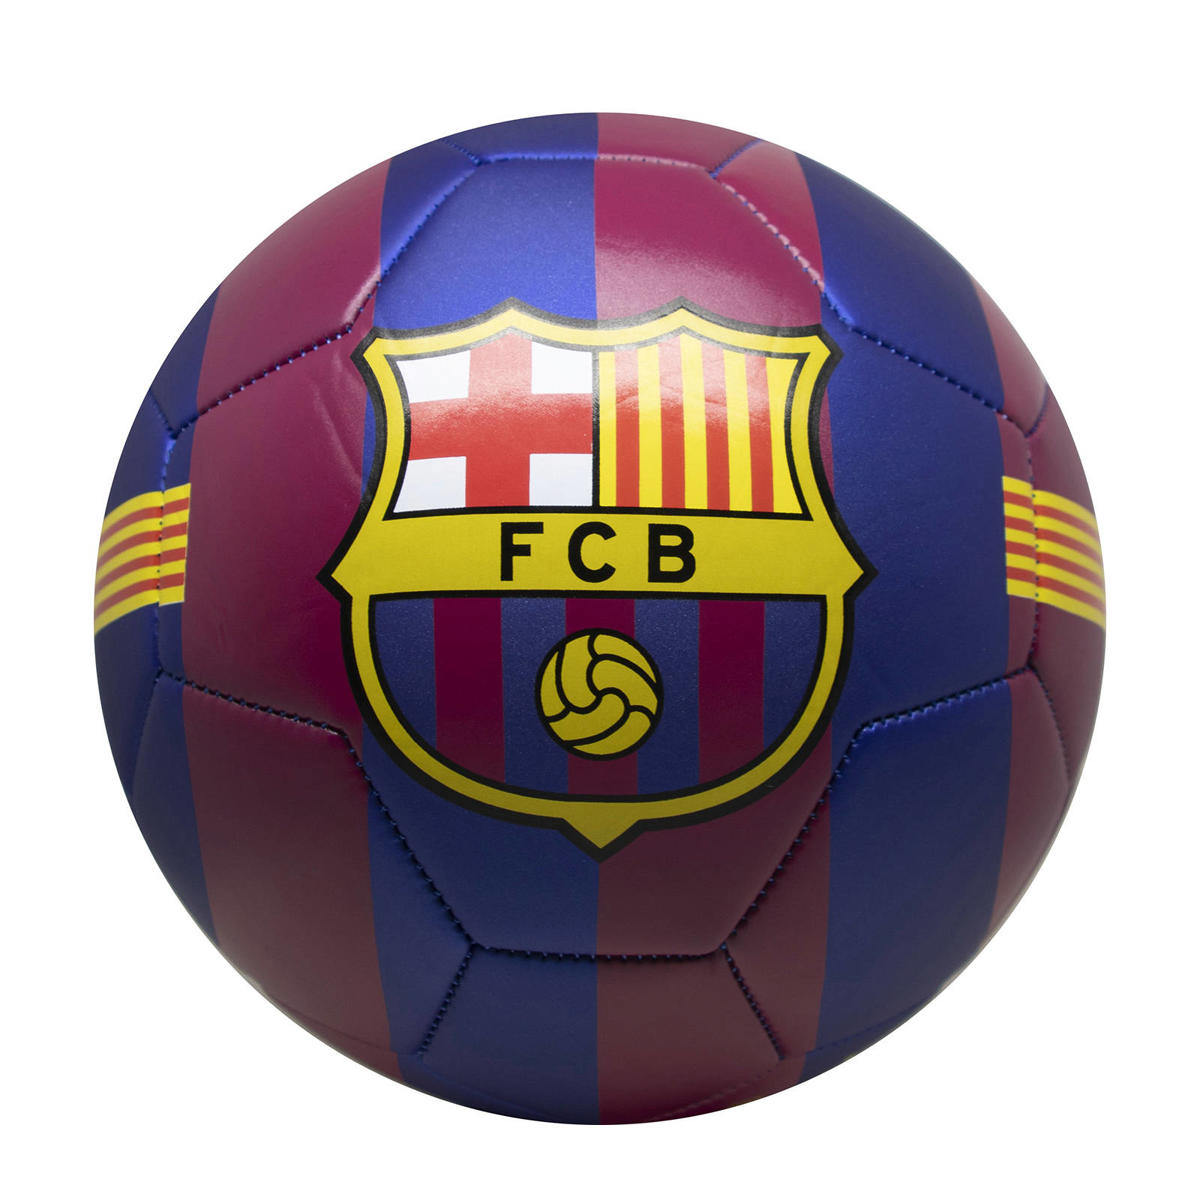 FC Barcelona FC Barcelona voetbal groot blauw/rood stripes 5 | wehkamp